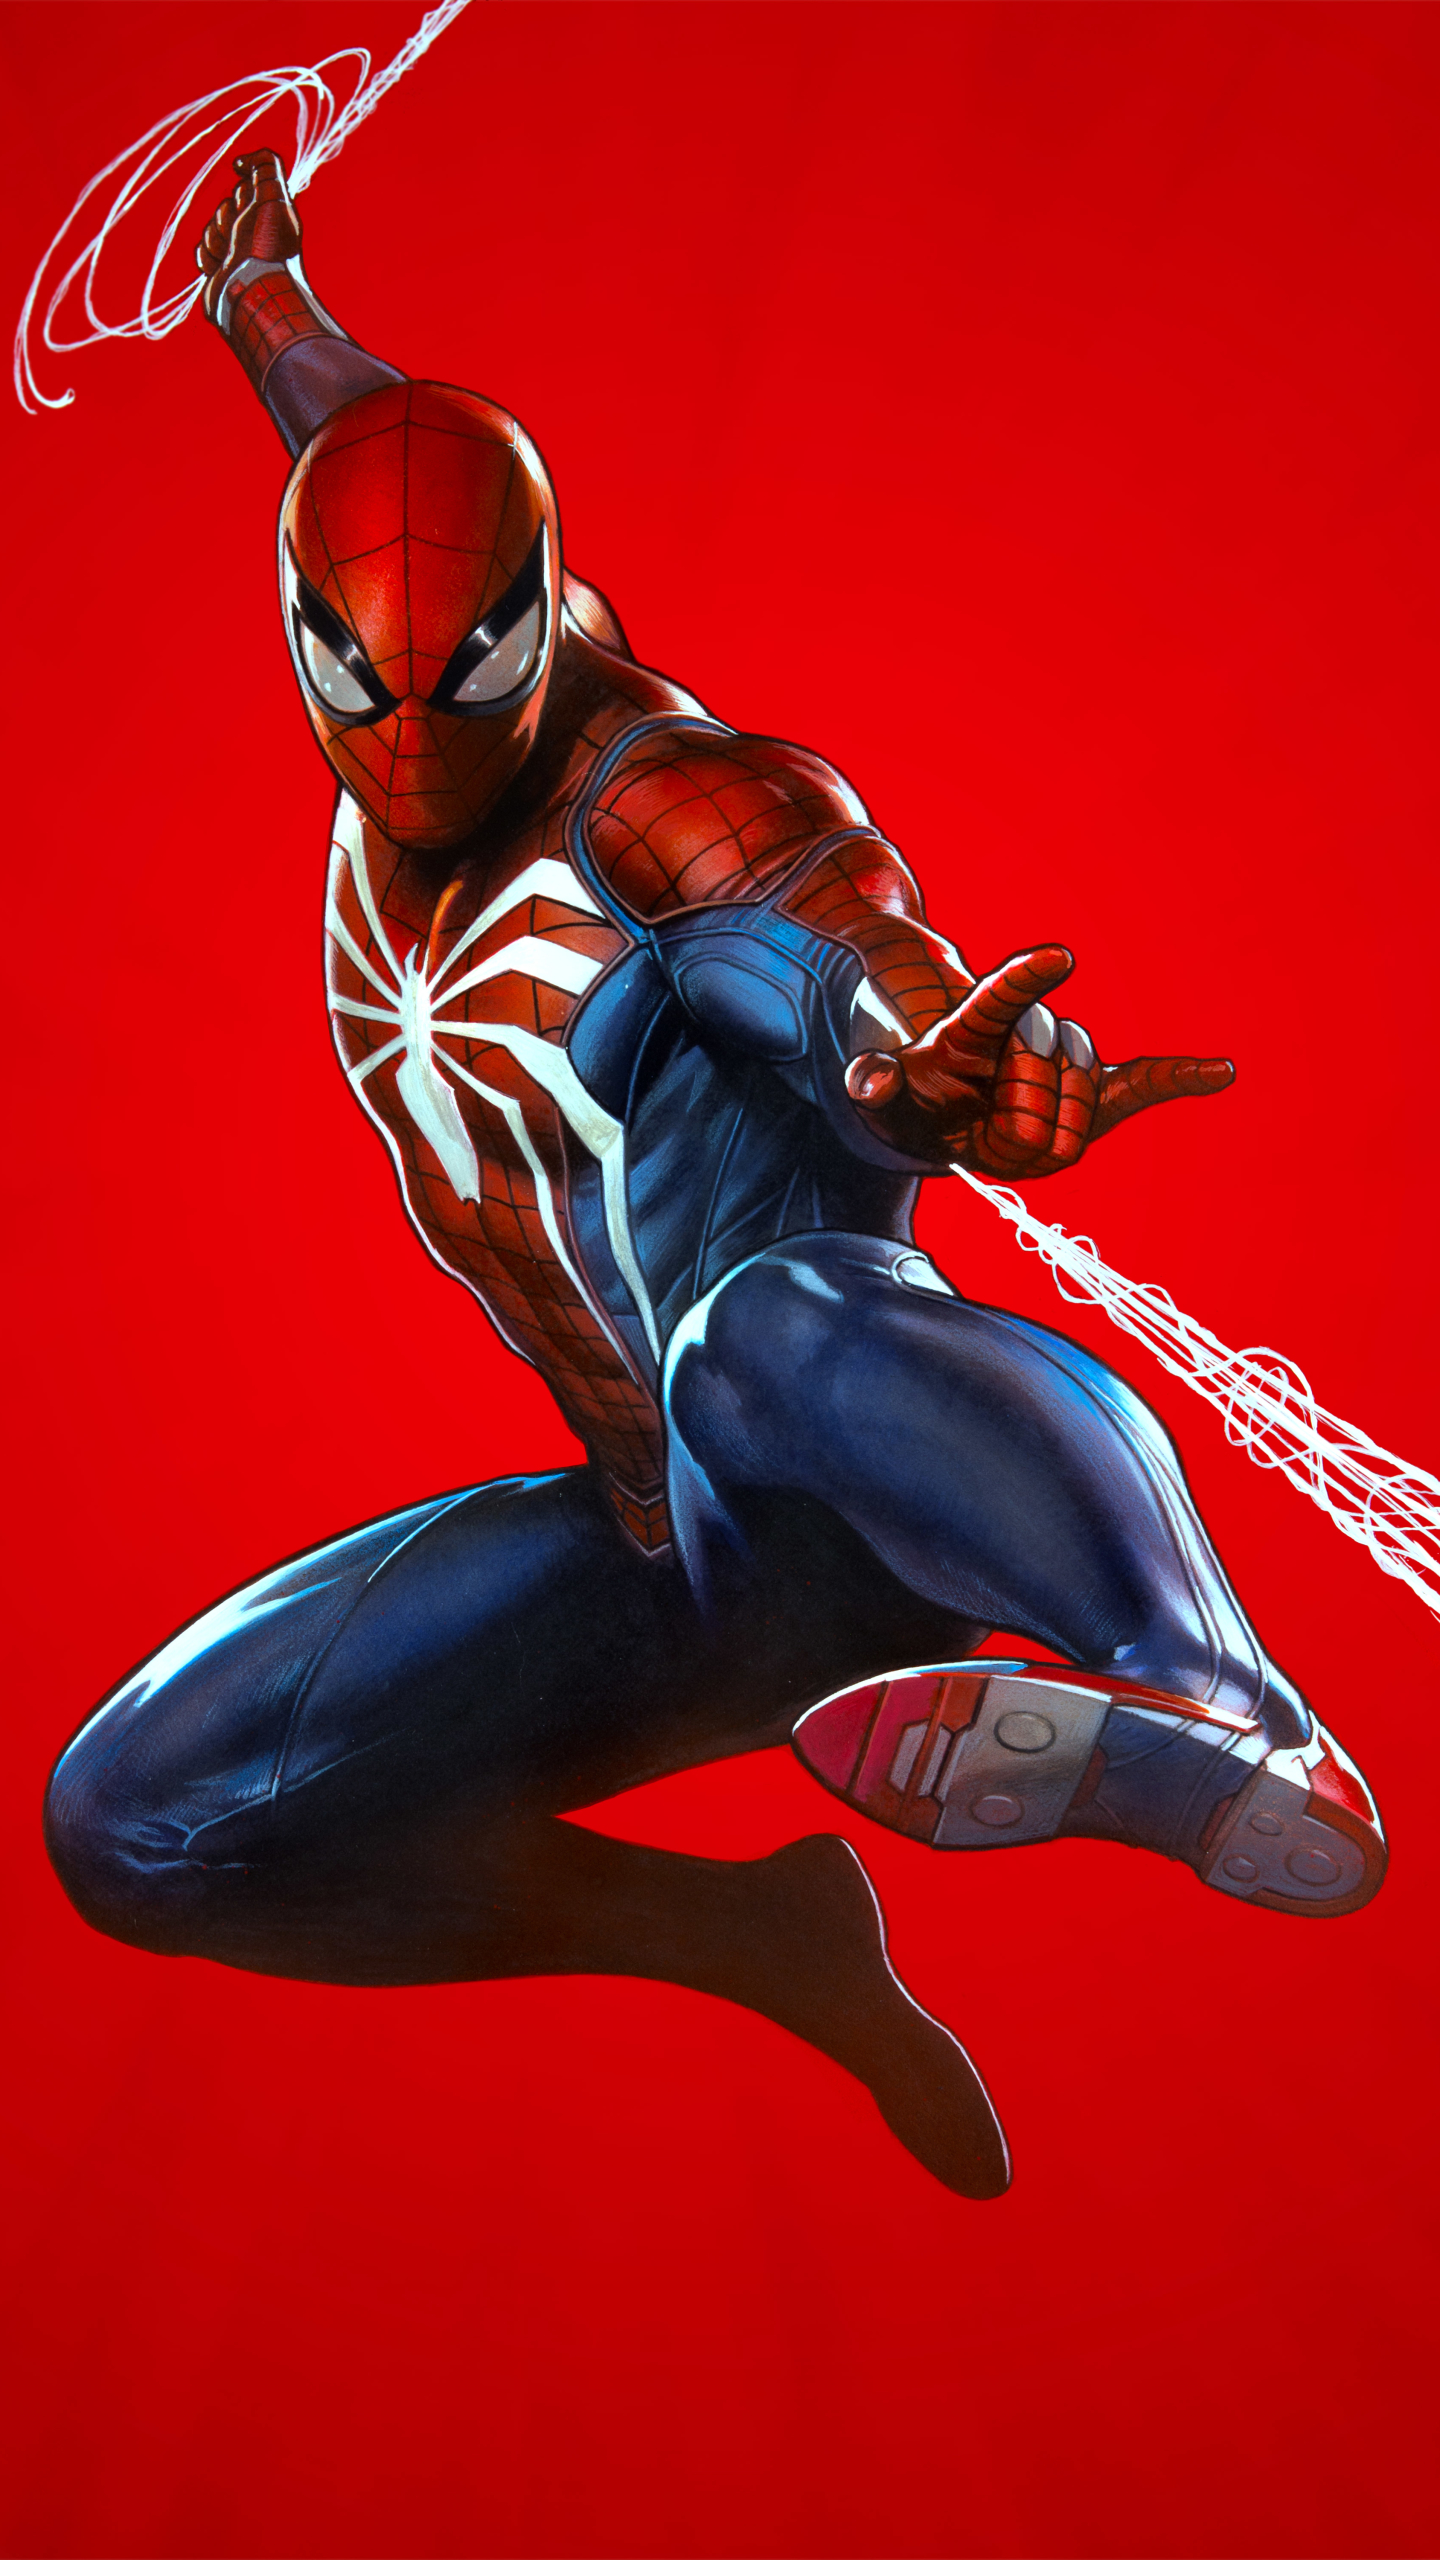 1080p Wallpaper  Spider Man (Ps4)